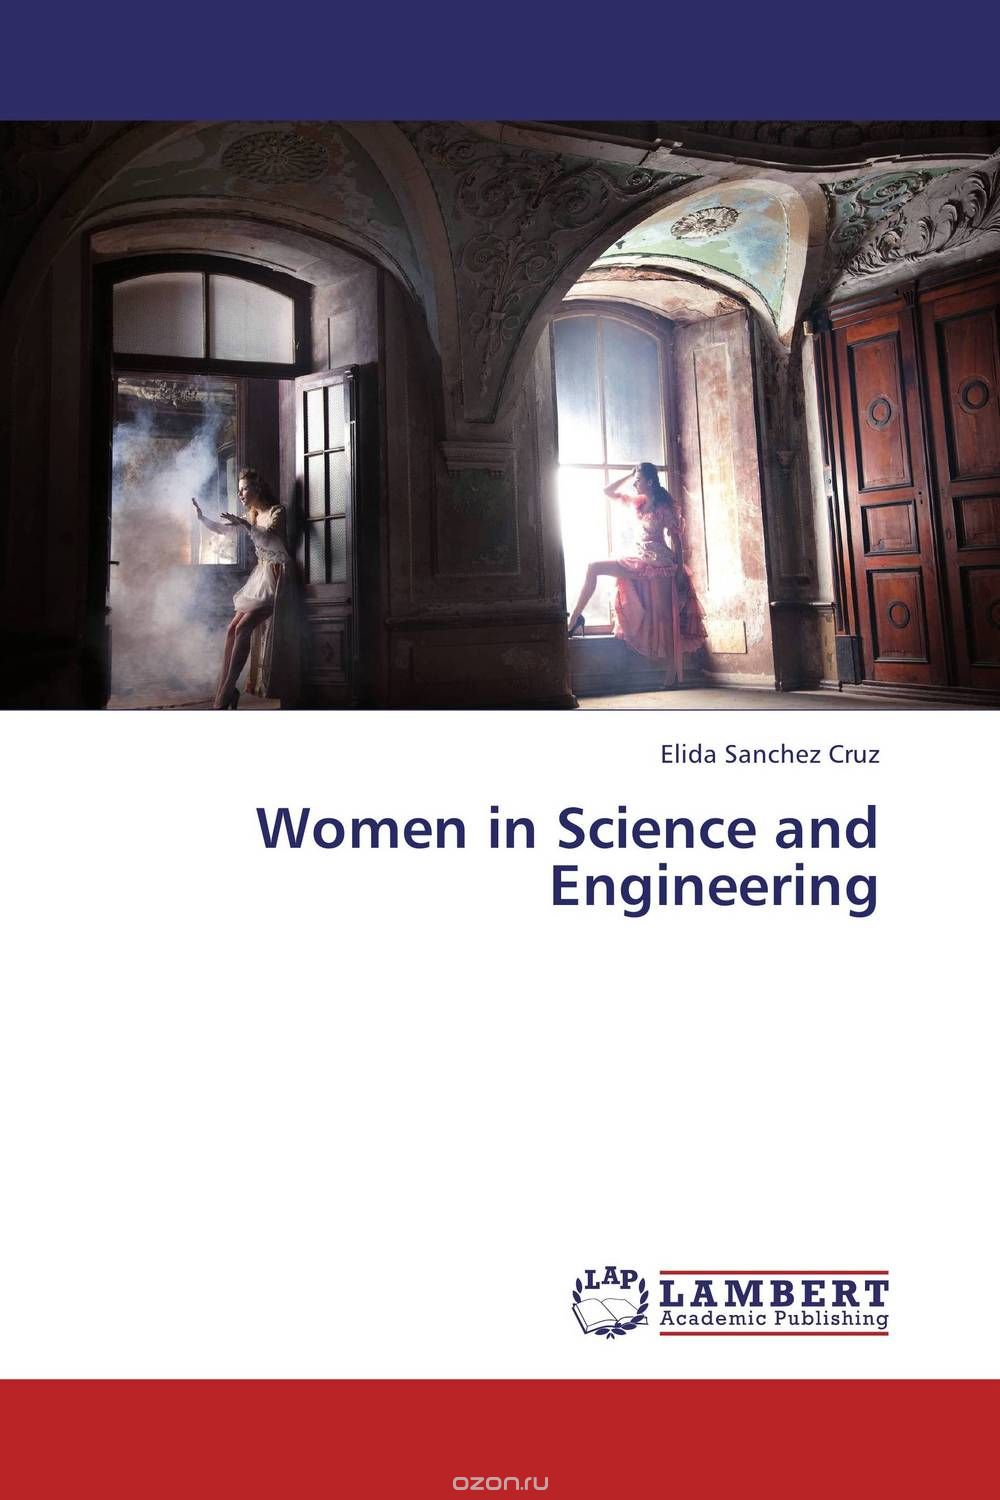 Скачать книгу "Women in Science and Engineering"